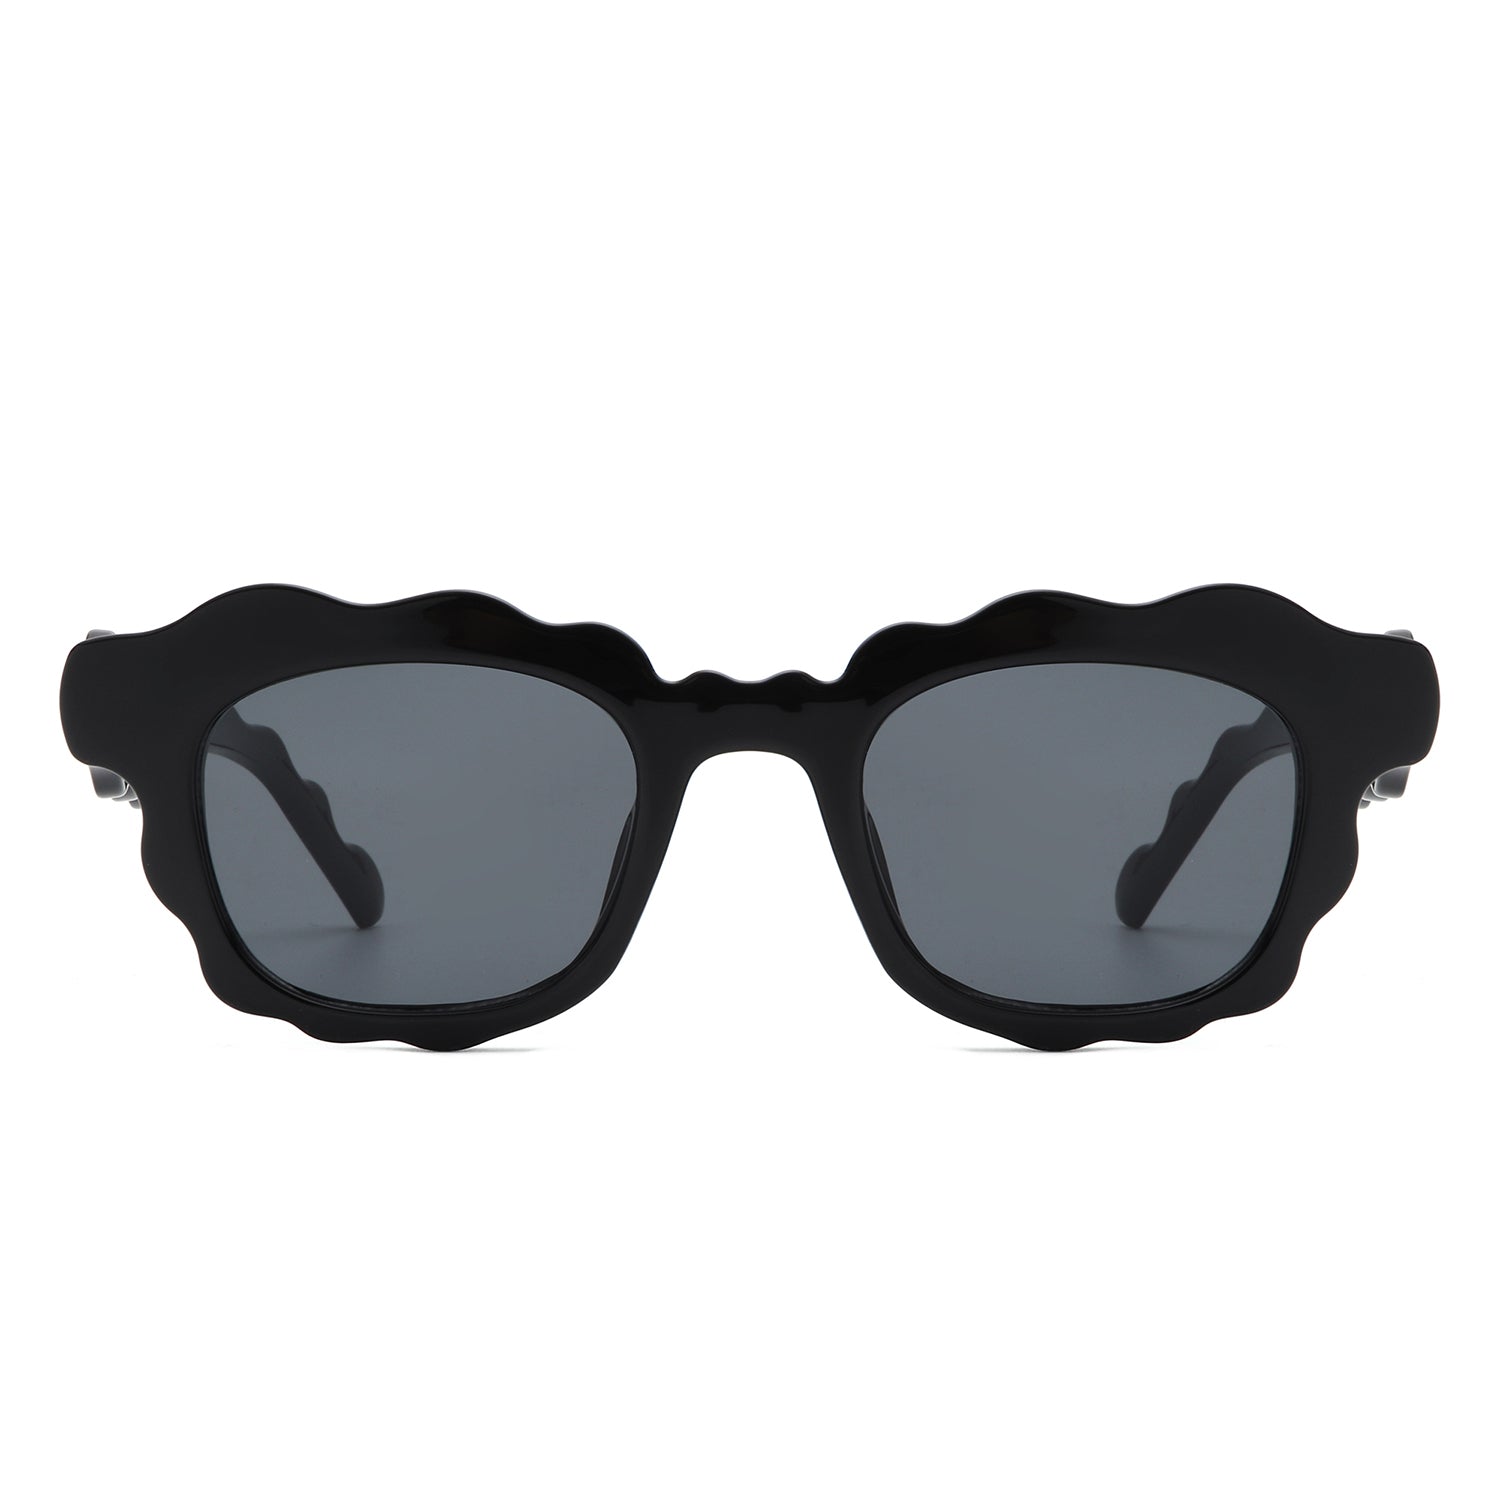 HS1255 - Square Modern Wavy Design Fashion Horn Rimmed Wholesale Sunglasses